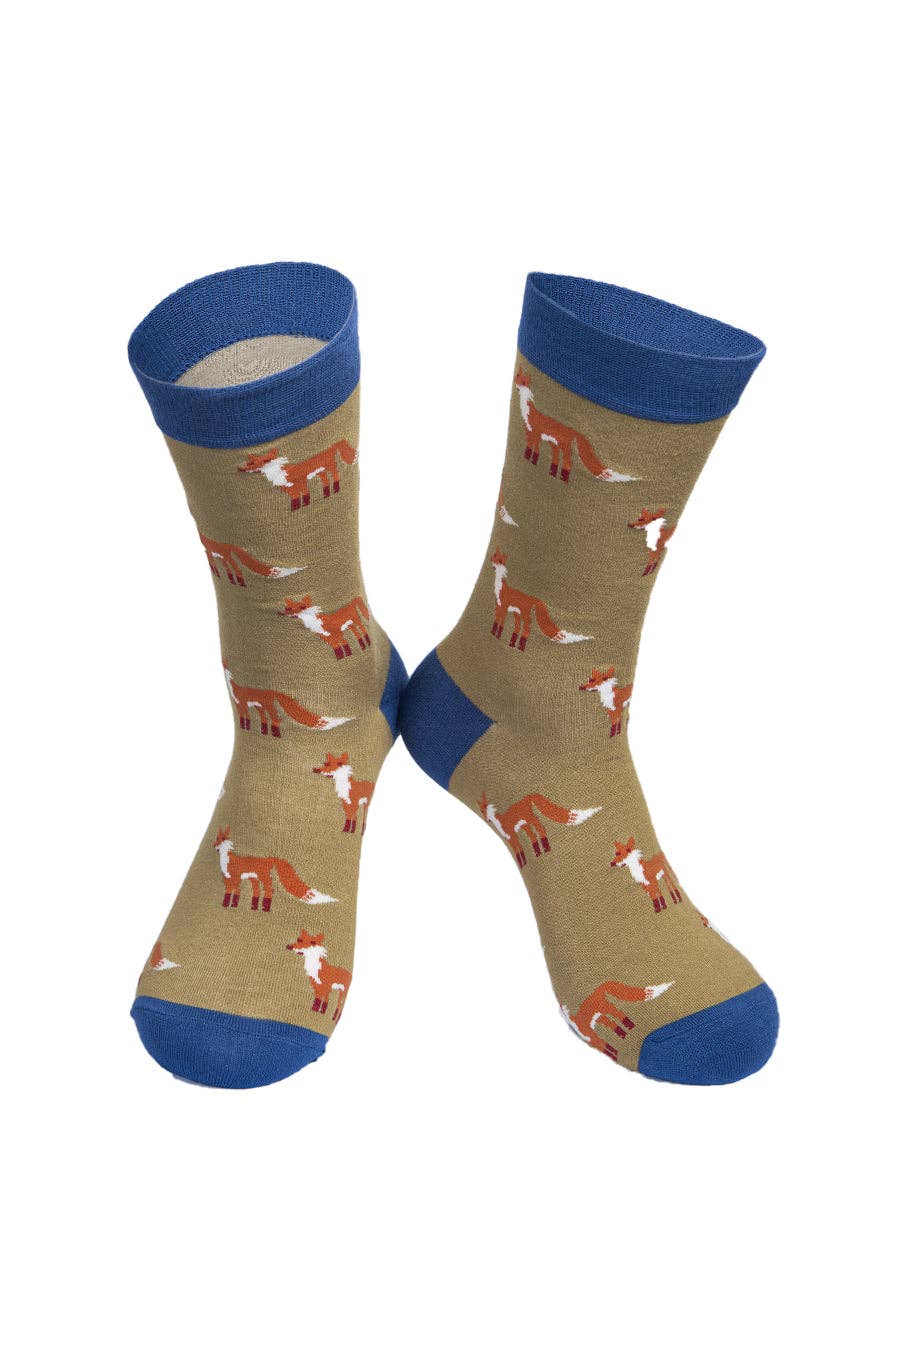 Sock Talk - Mens Bamboo Fox Socks Novelty Woodland Animal Dress Socks